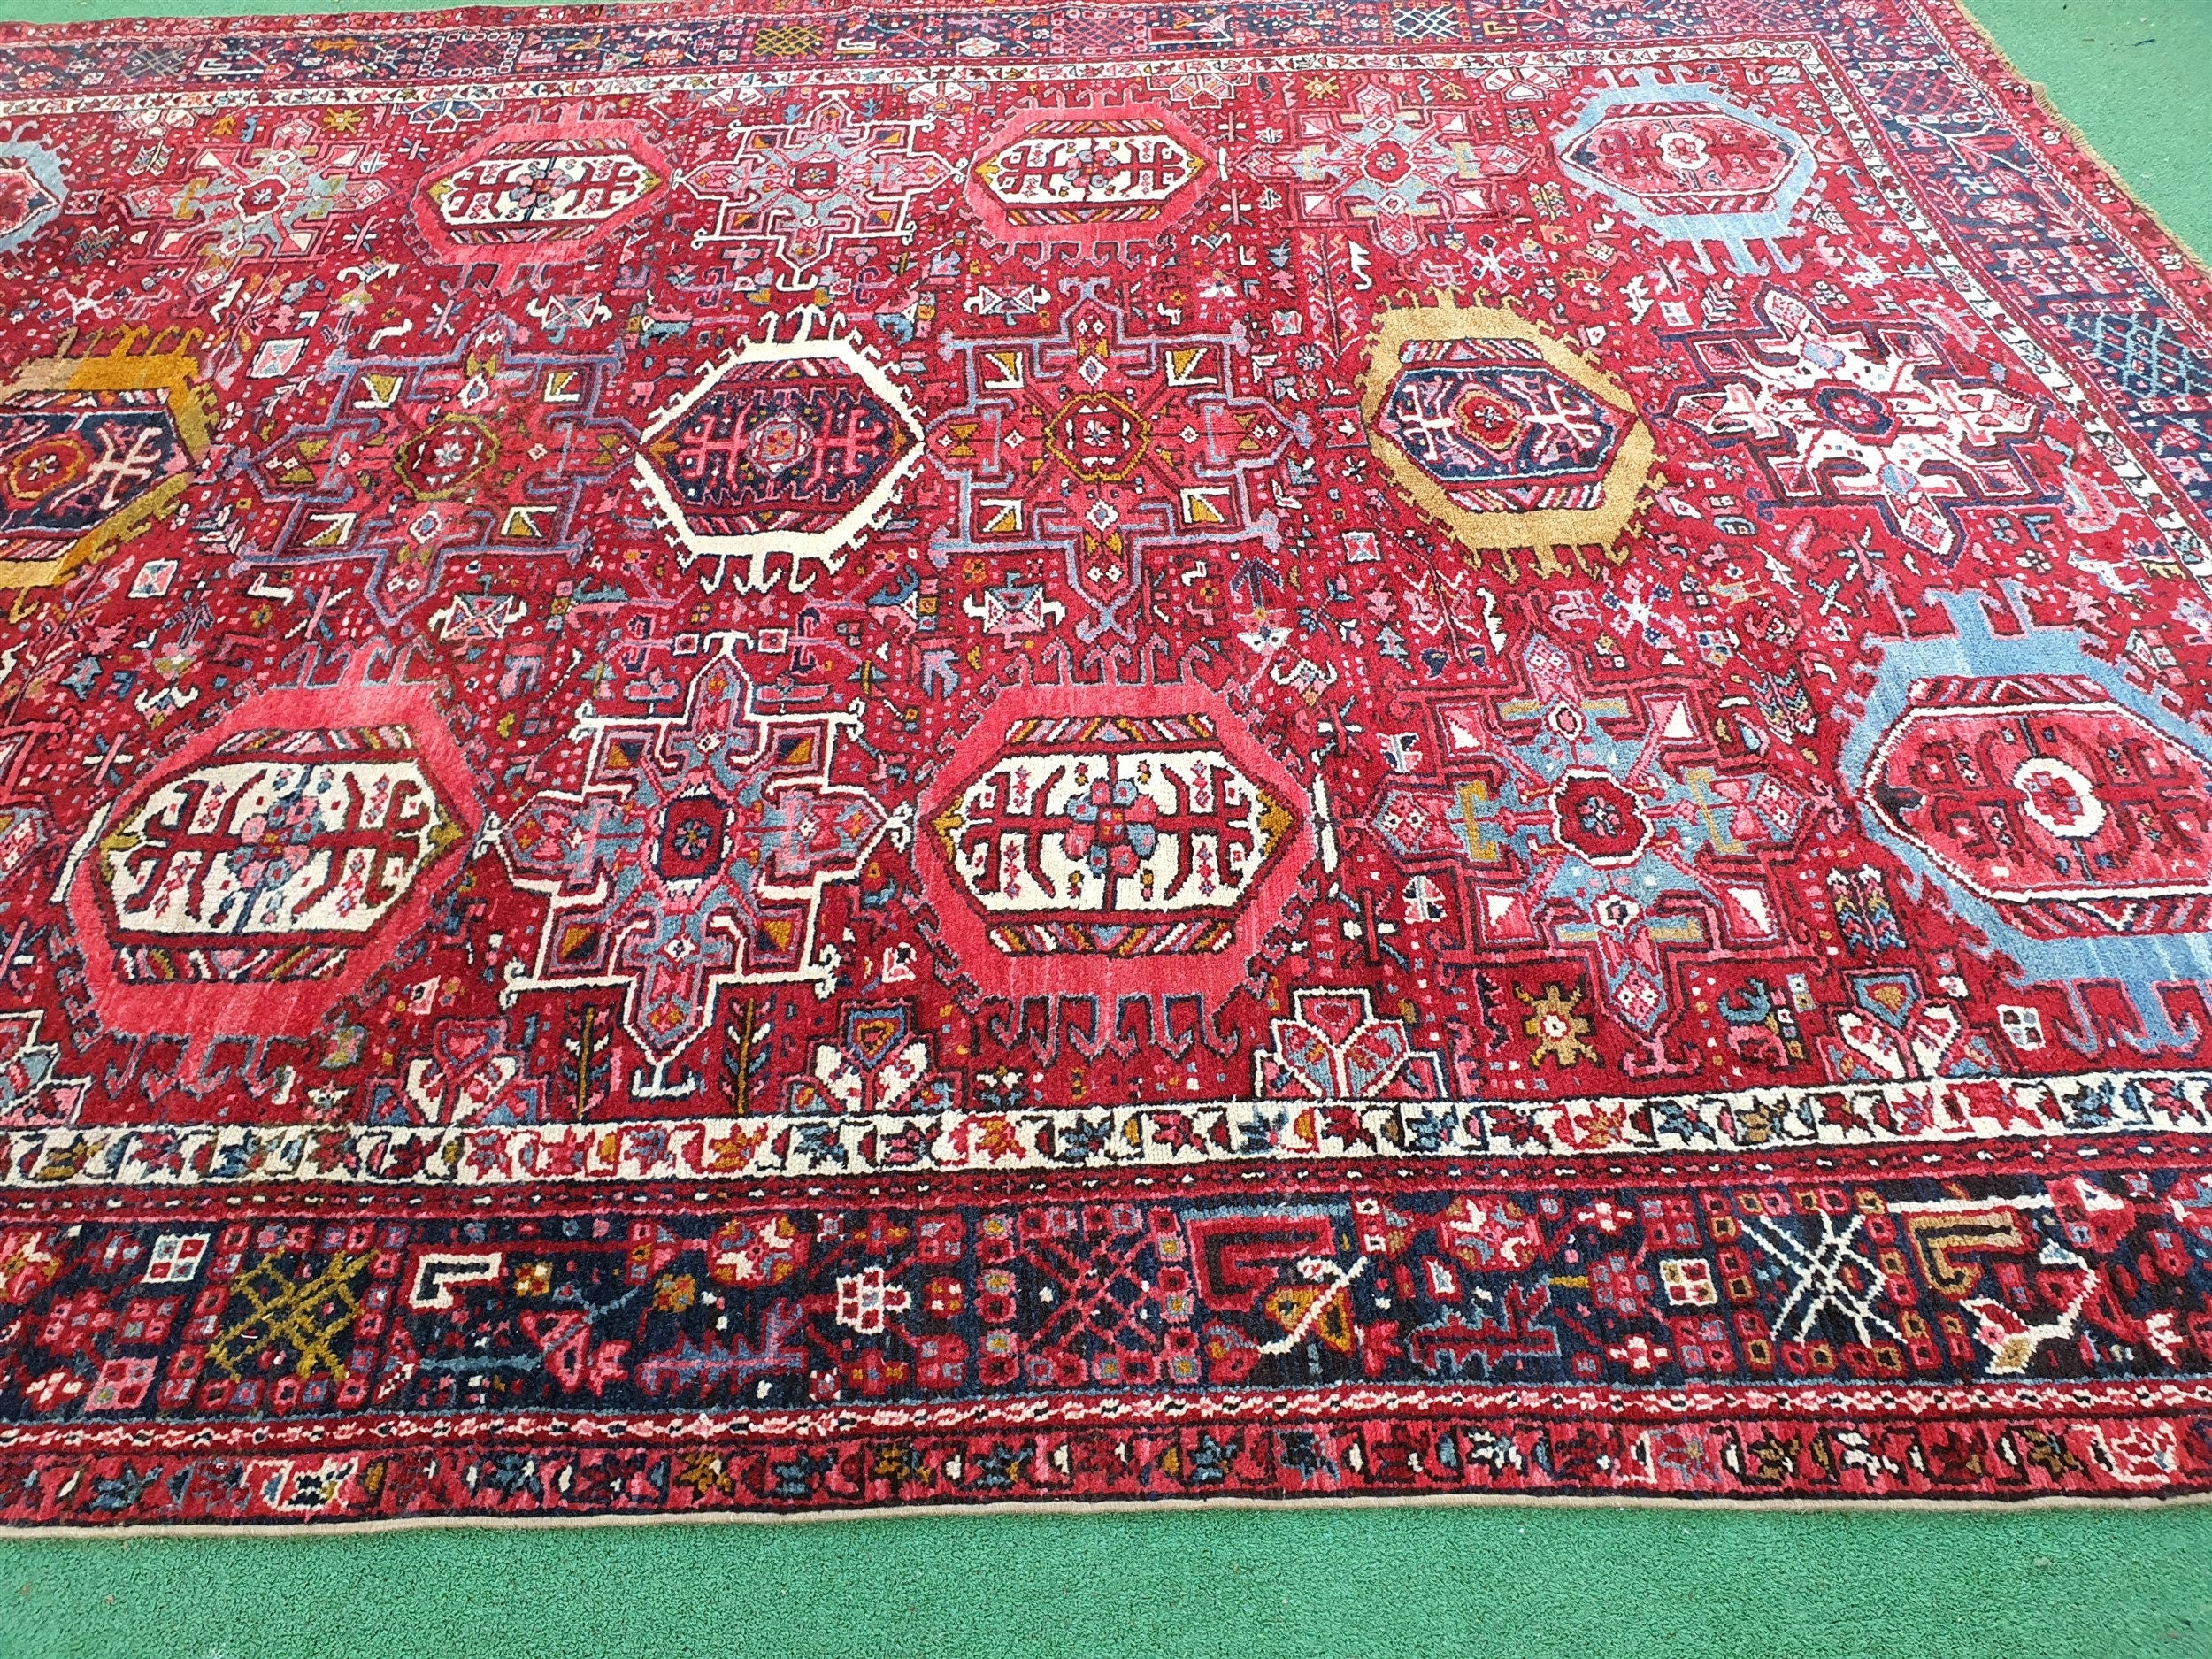 Vintage Persian Rug 12 x 8 ft Red Blue Turkish  Floral Medallion Large Floor Rug., Handmade Boho Rustic Natural Wool Living Dining Room Rug